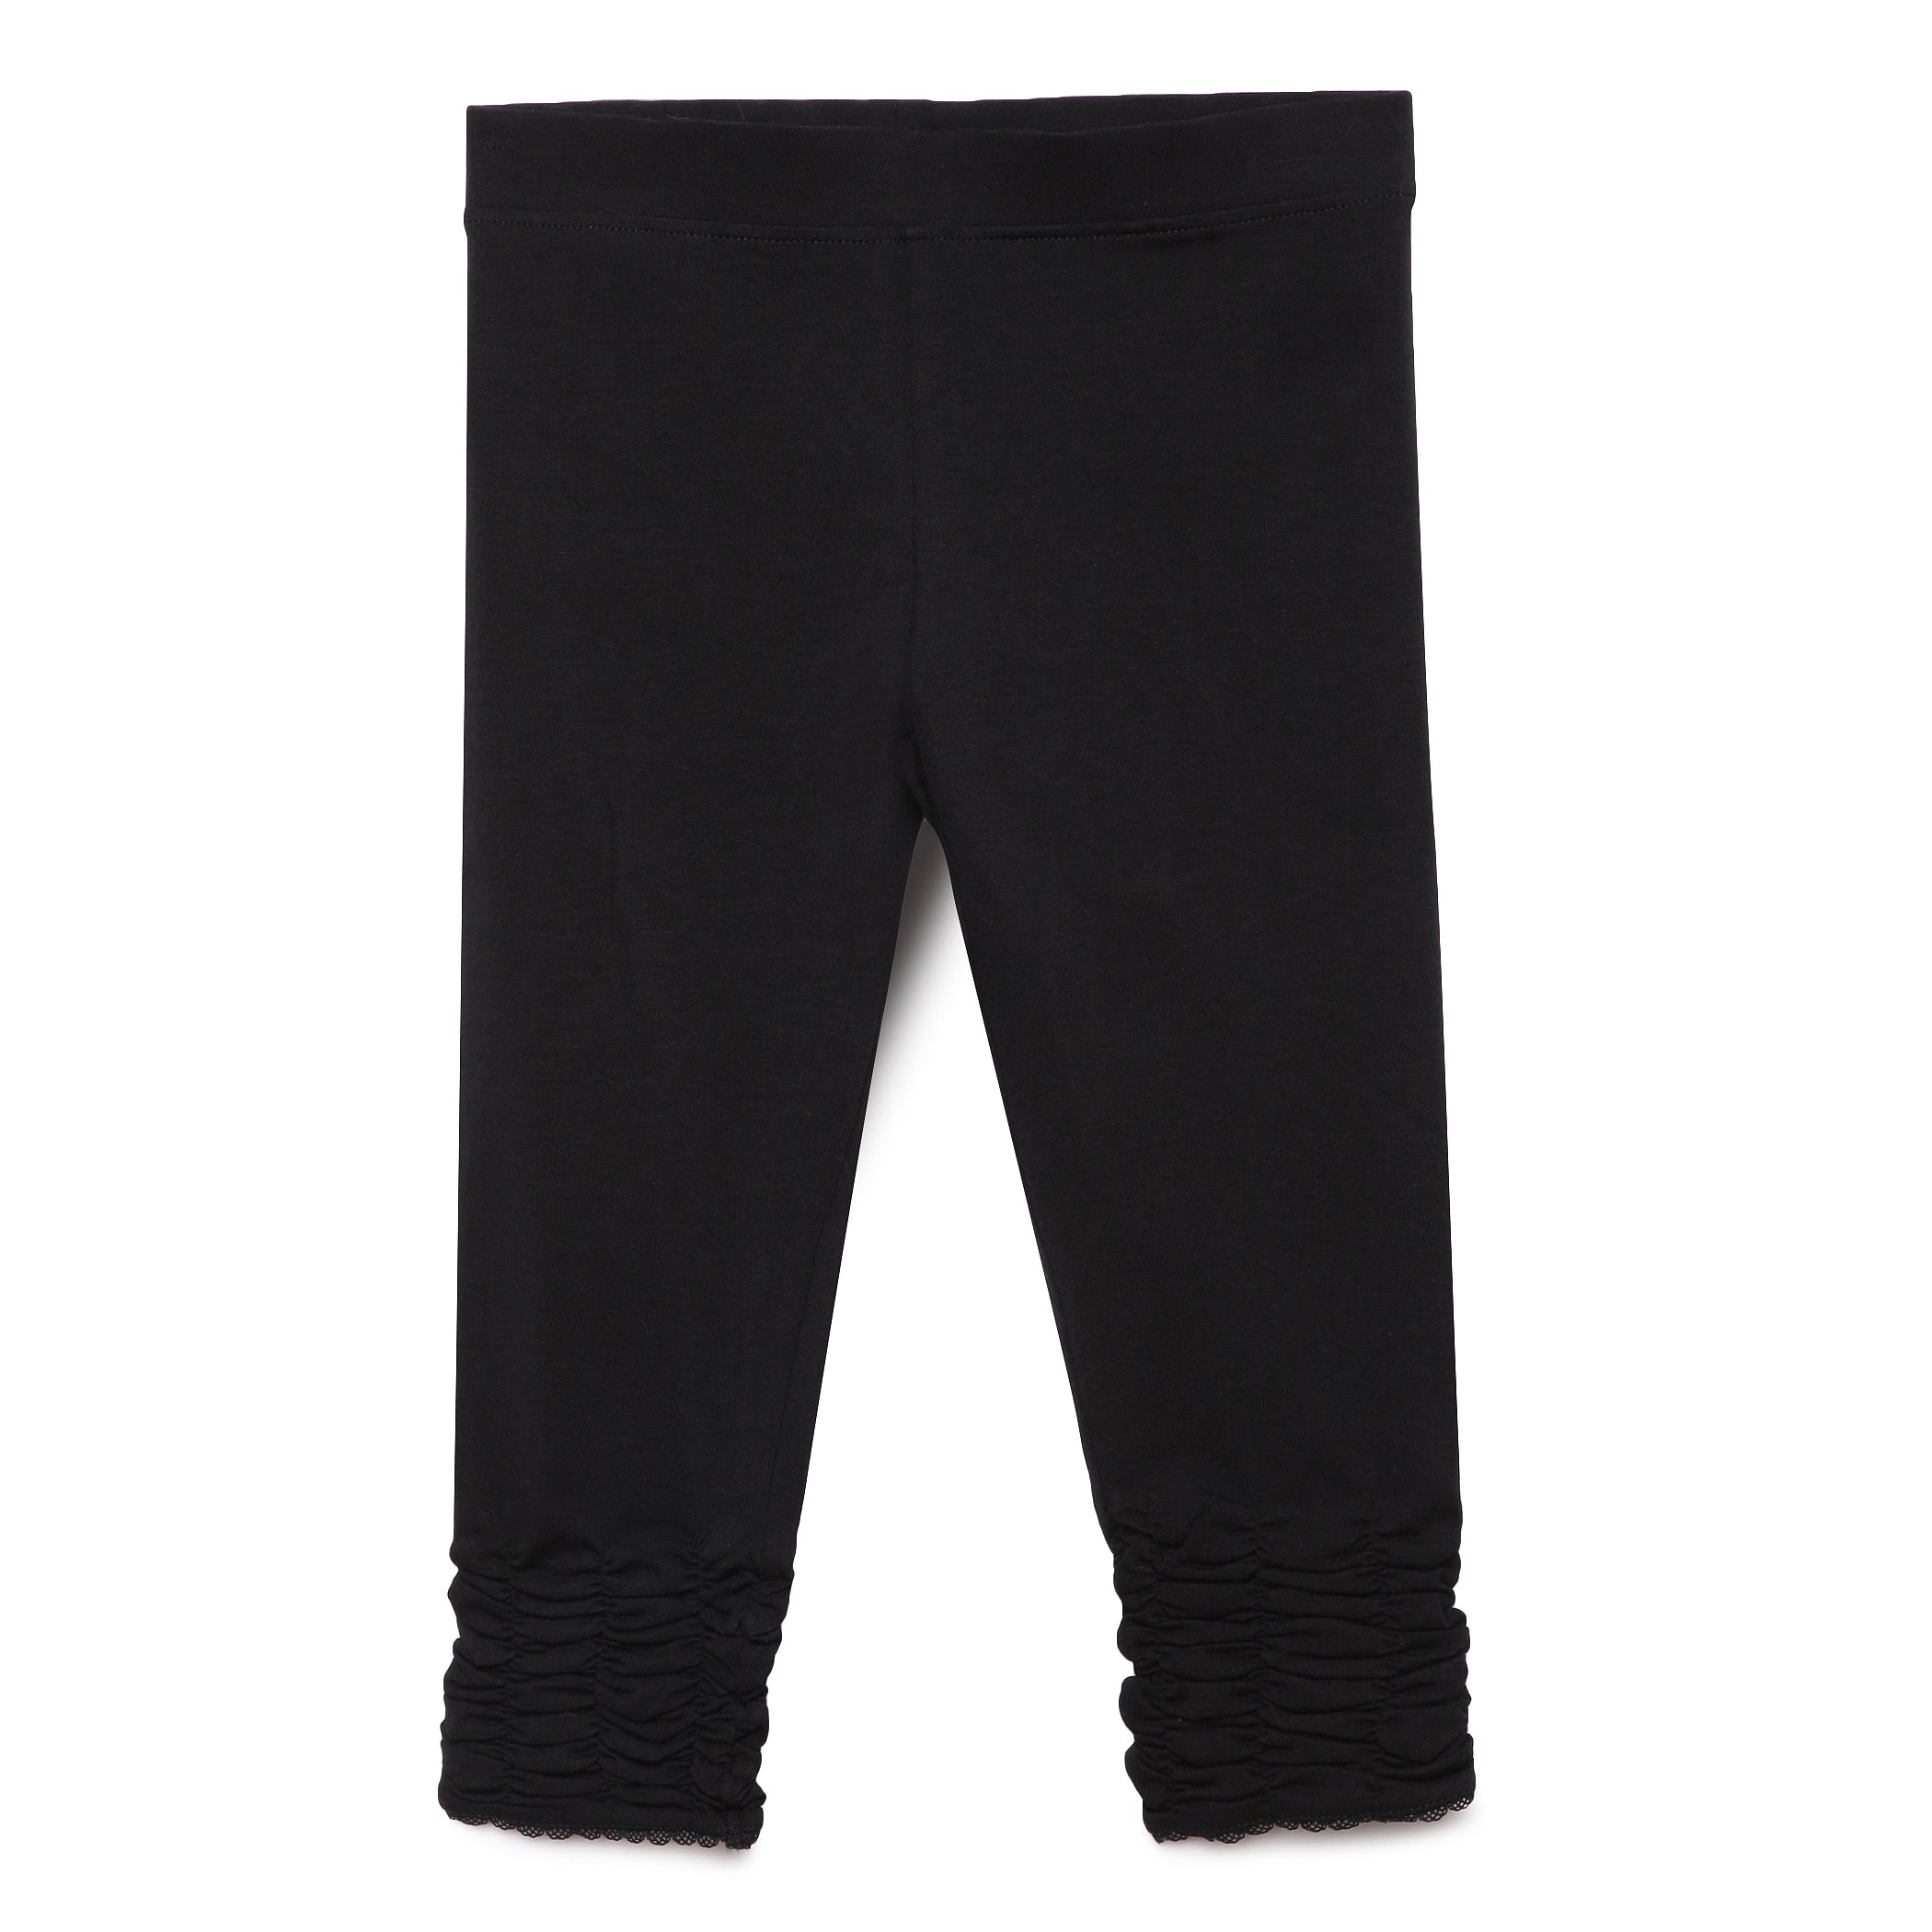 Girls Children's Leggings Trousers Capri 3/4 Short With Lace Cotton | eBay